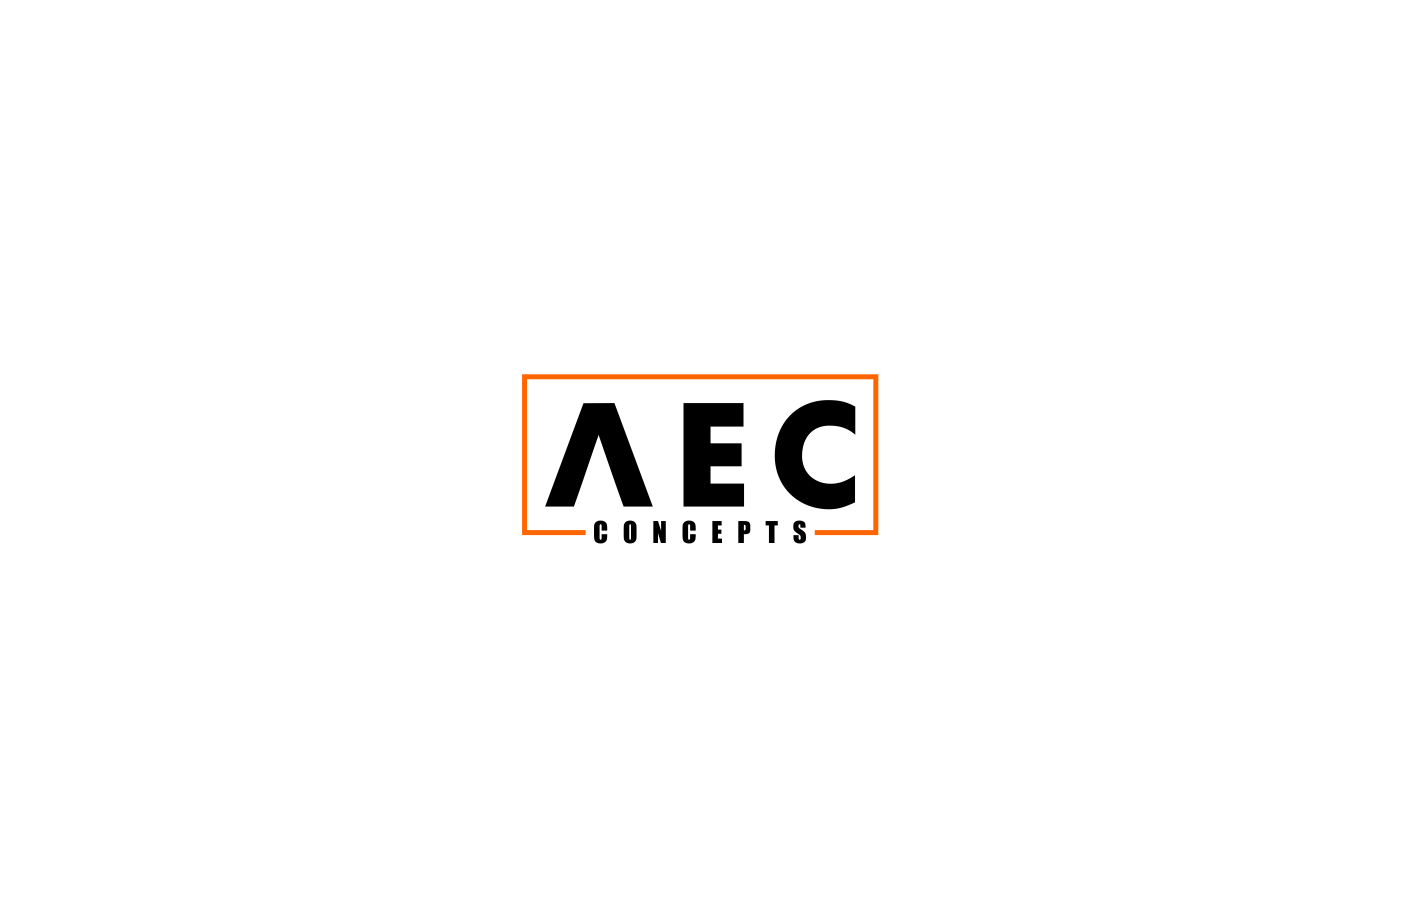 AEC Logo - Modern, Elegant, Business Logo Design for AEC Concepts by Desde R ...